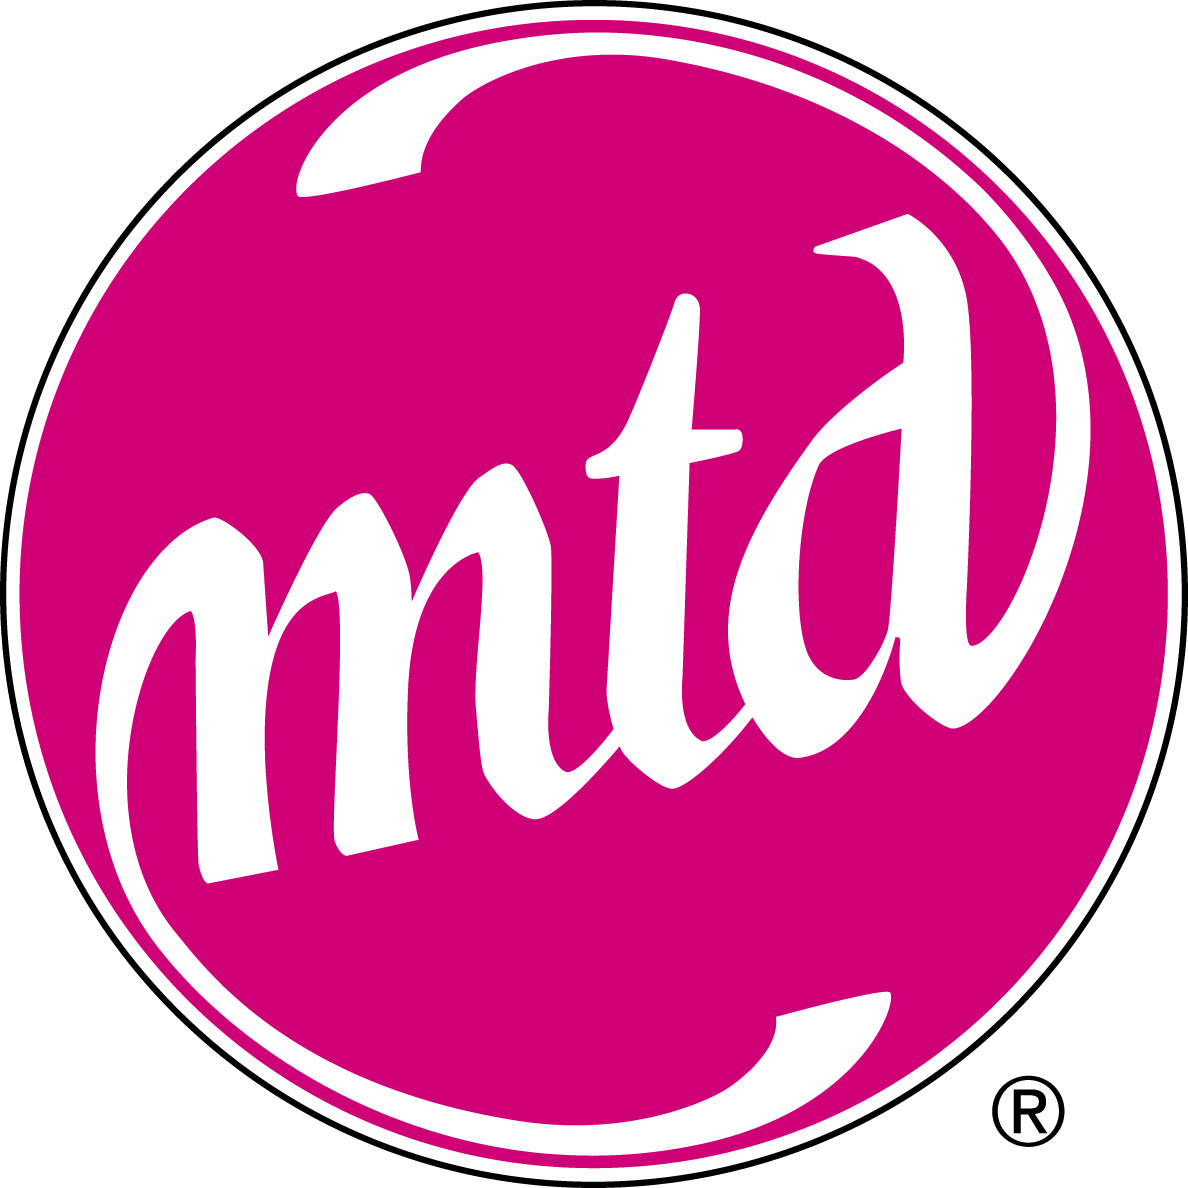 michael-tobias-design-logo-mtd-gruvgear.jpg